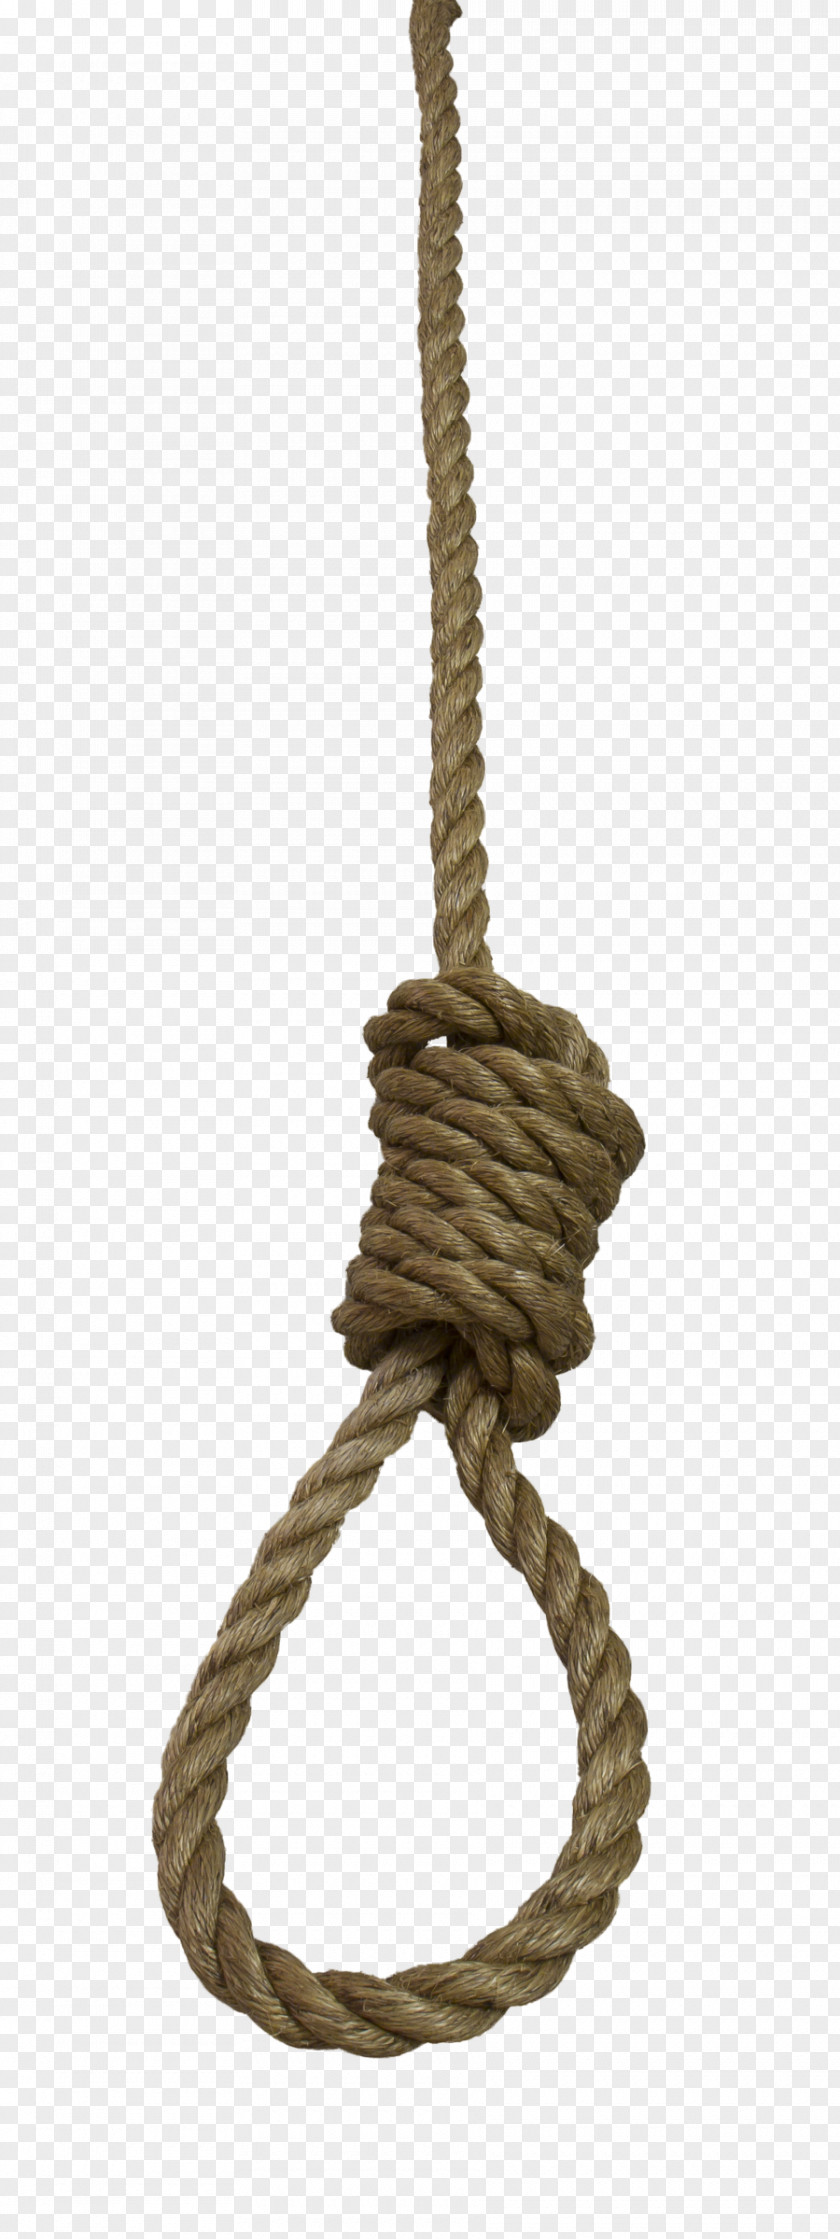 Rope Noose Hangman's Knot Clip Art PNG